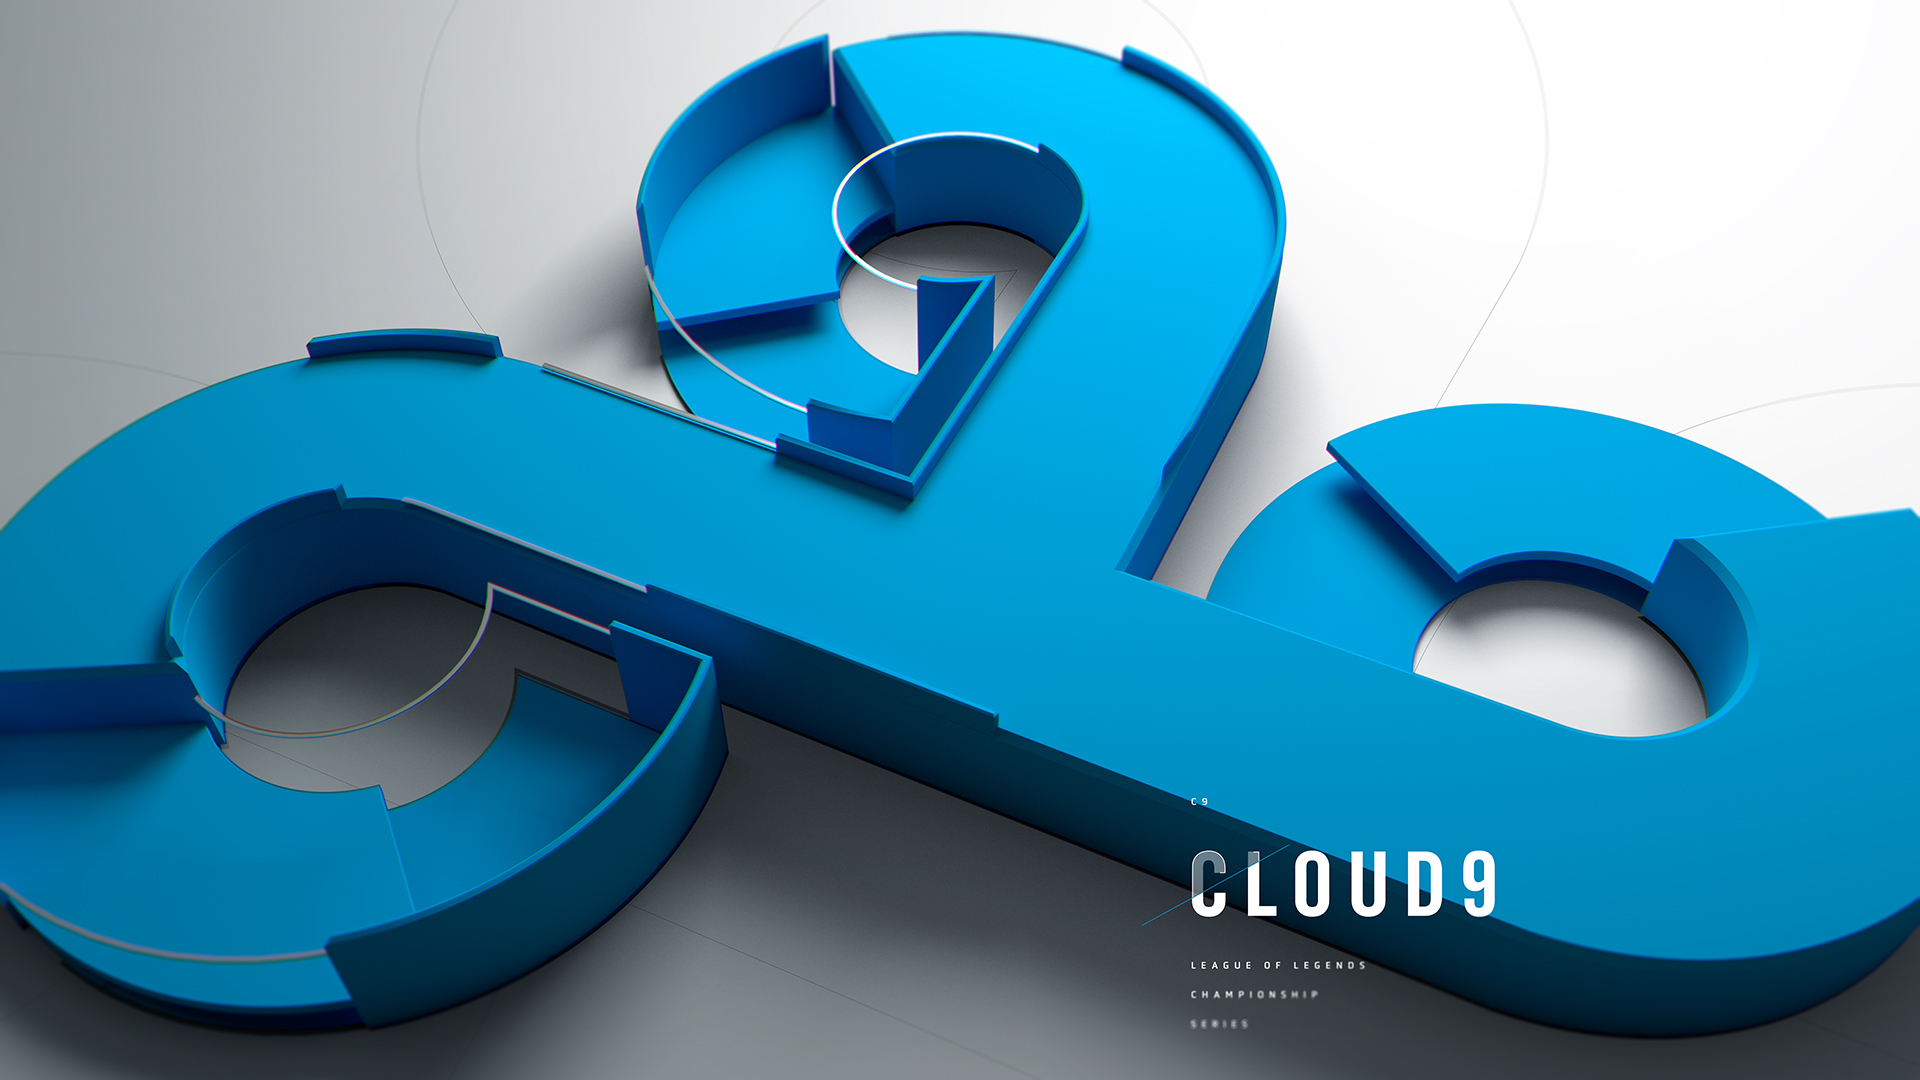 Cloud 9 Wallpaper 2019 - HD Wallpaper 